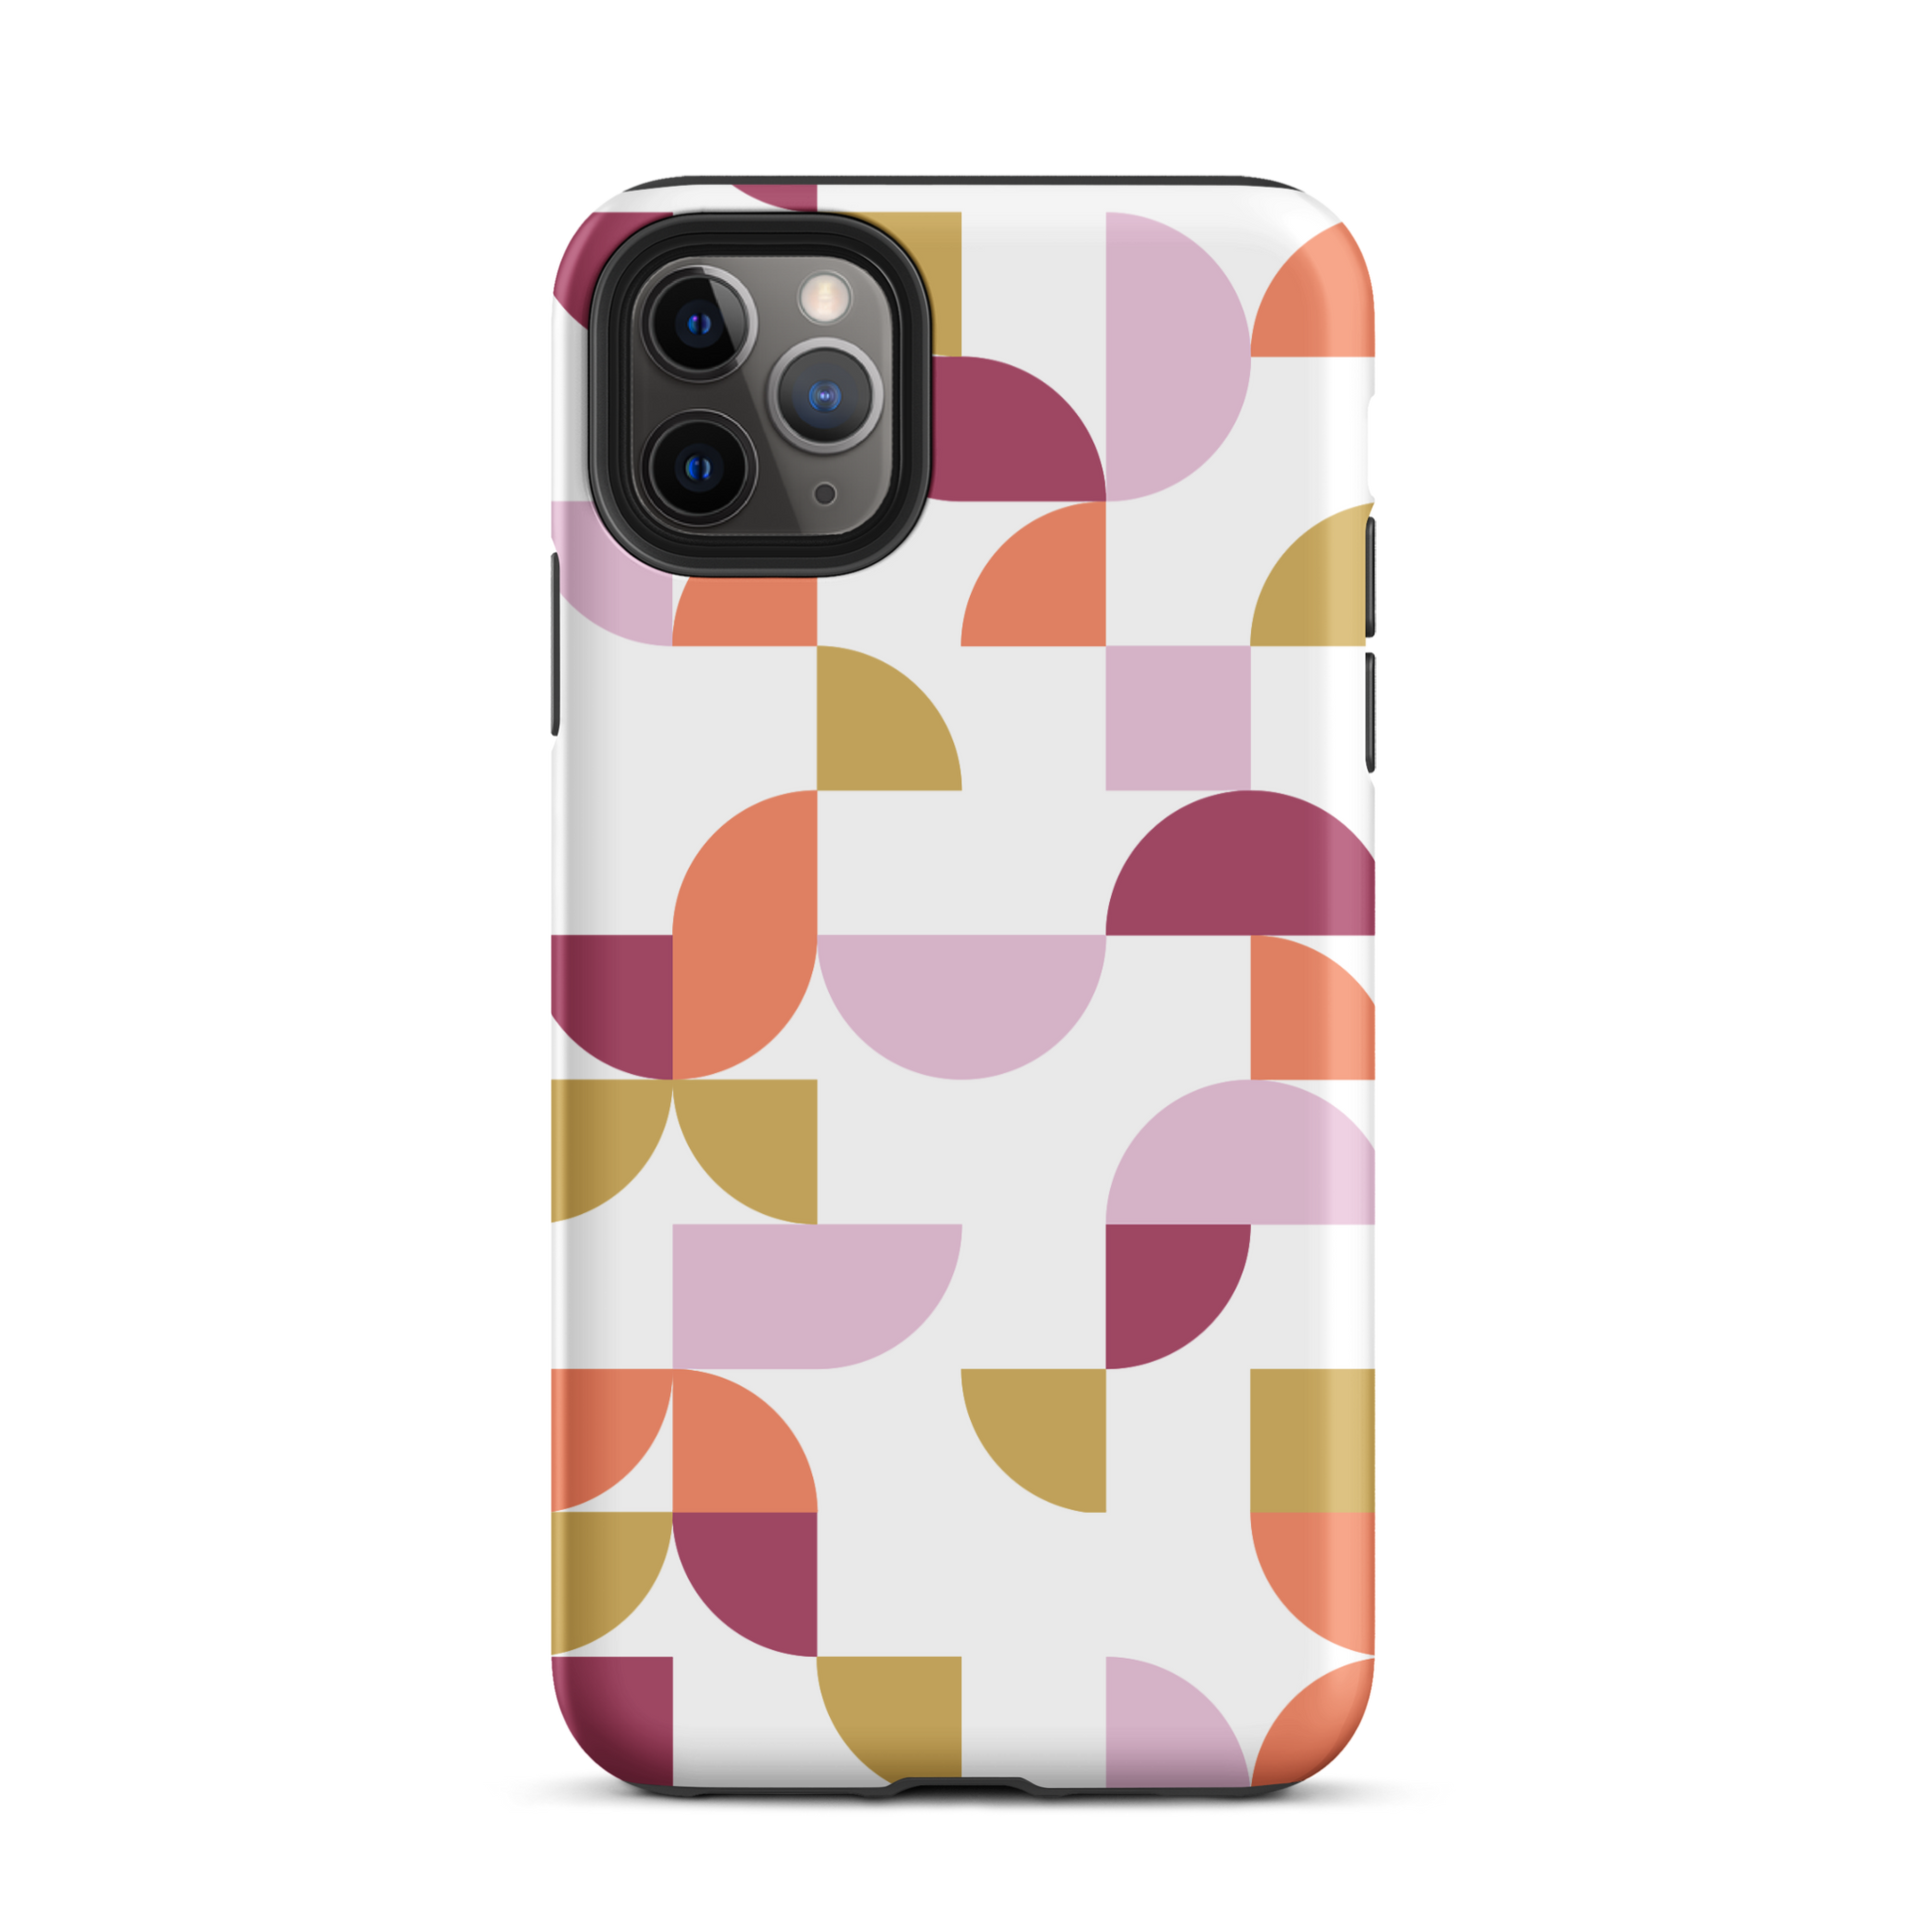 iPhone 11 Pro max tough case in Geometria I Sunset design